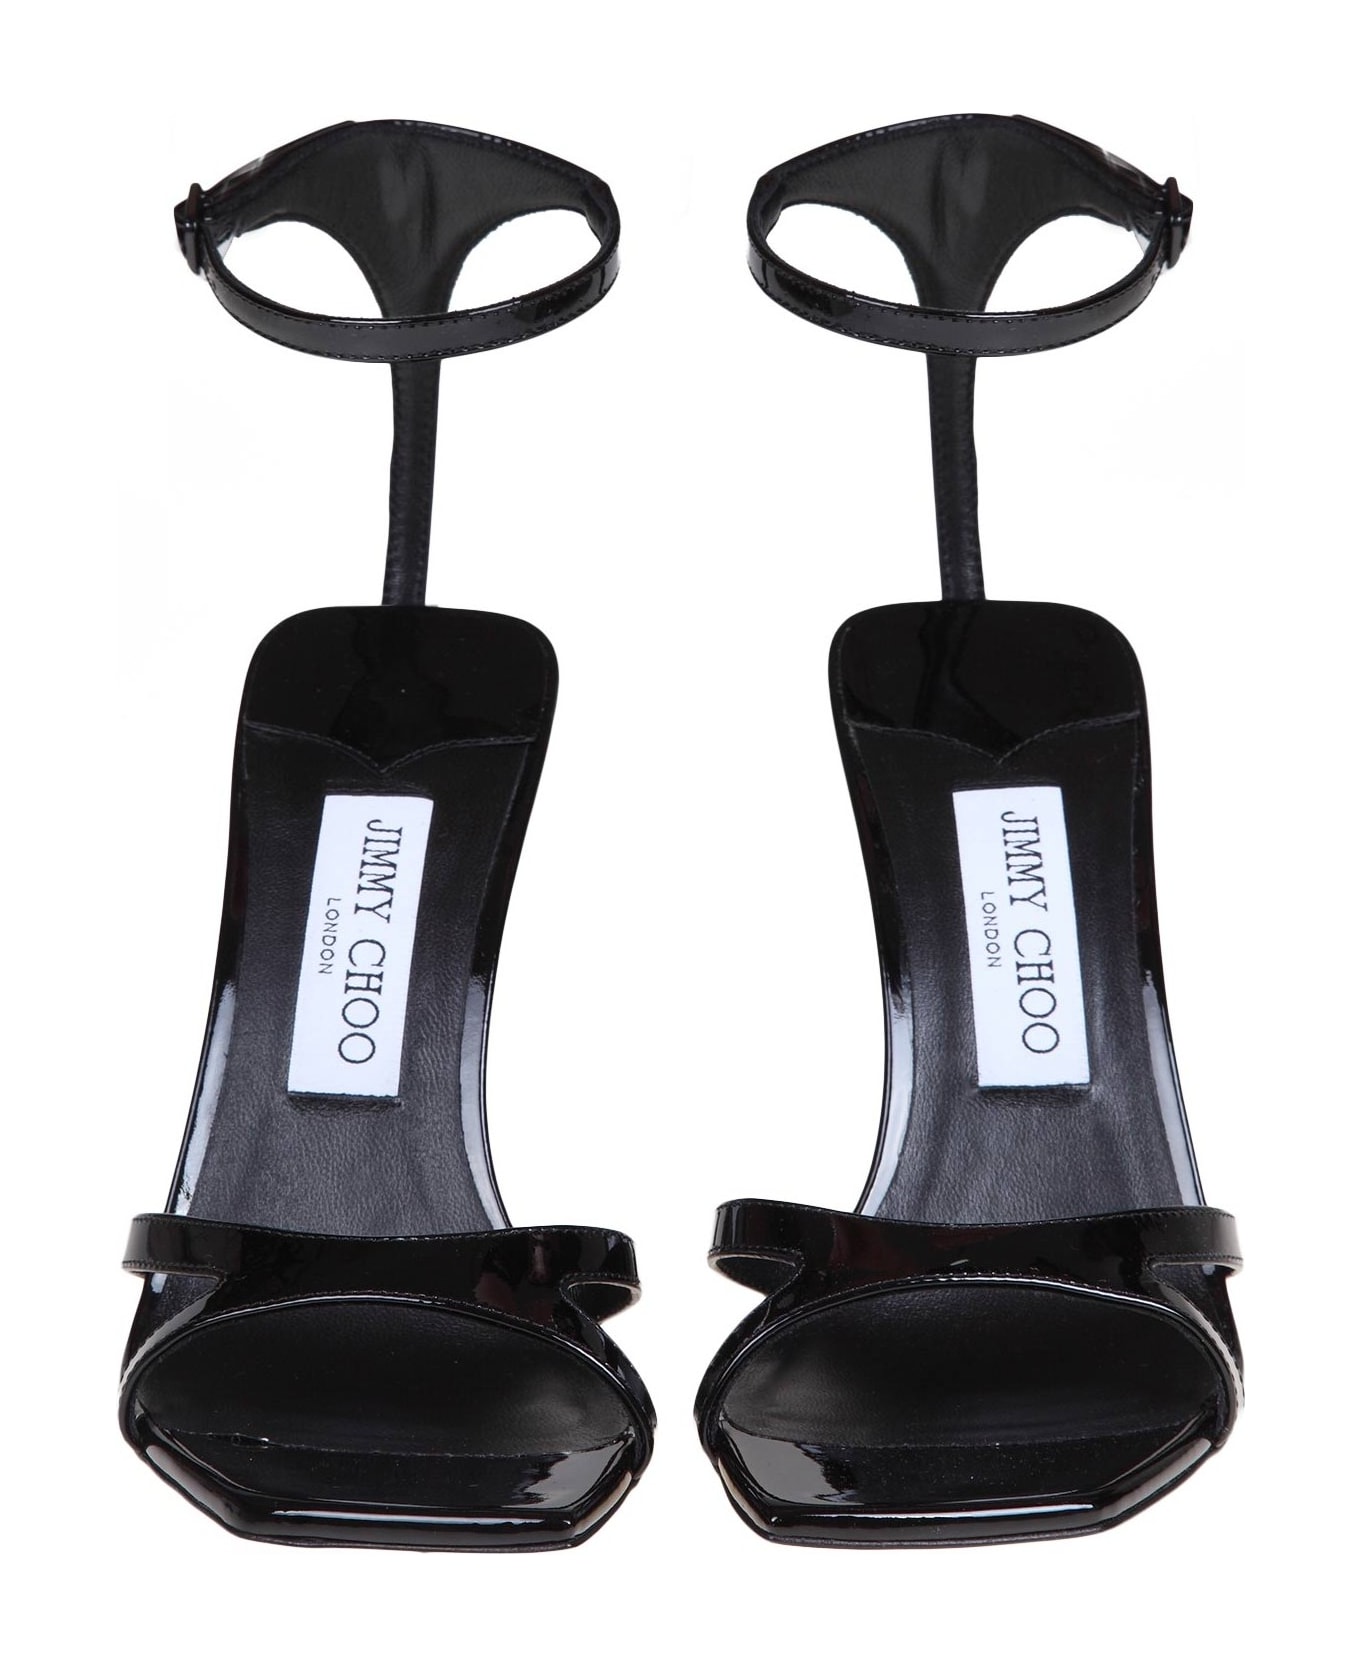 Jimmy Choo Ixix 95 Sandal In Black Patent - Black